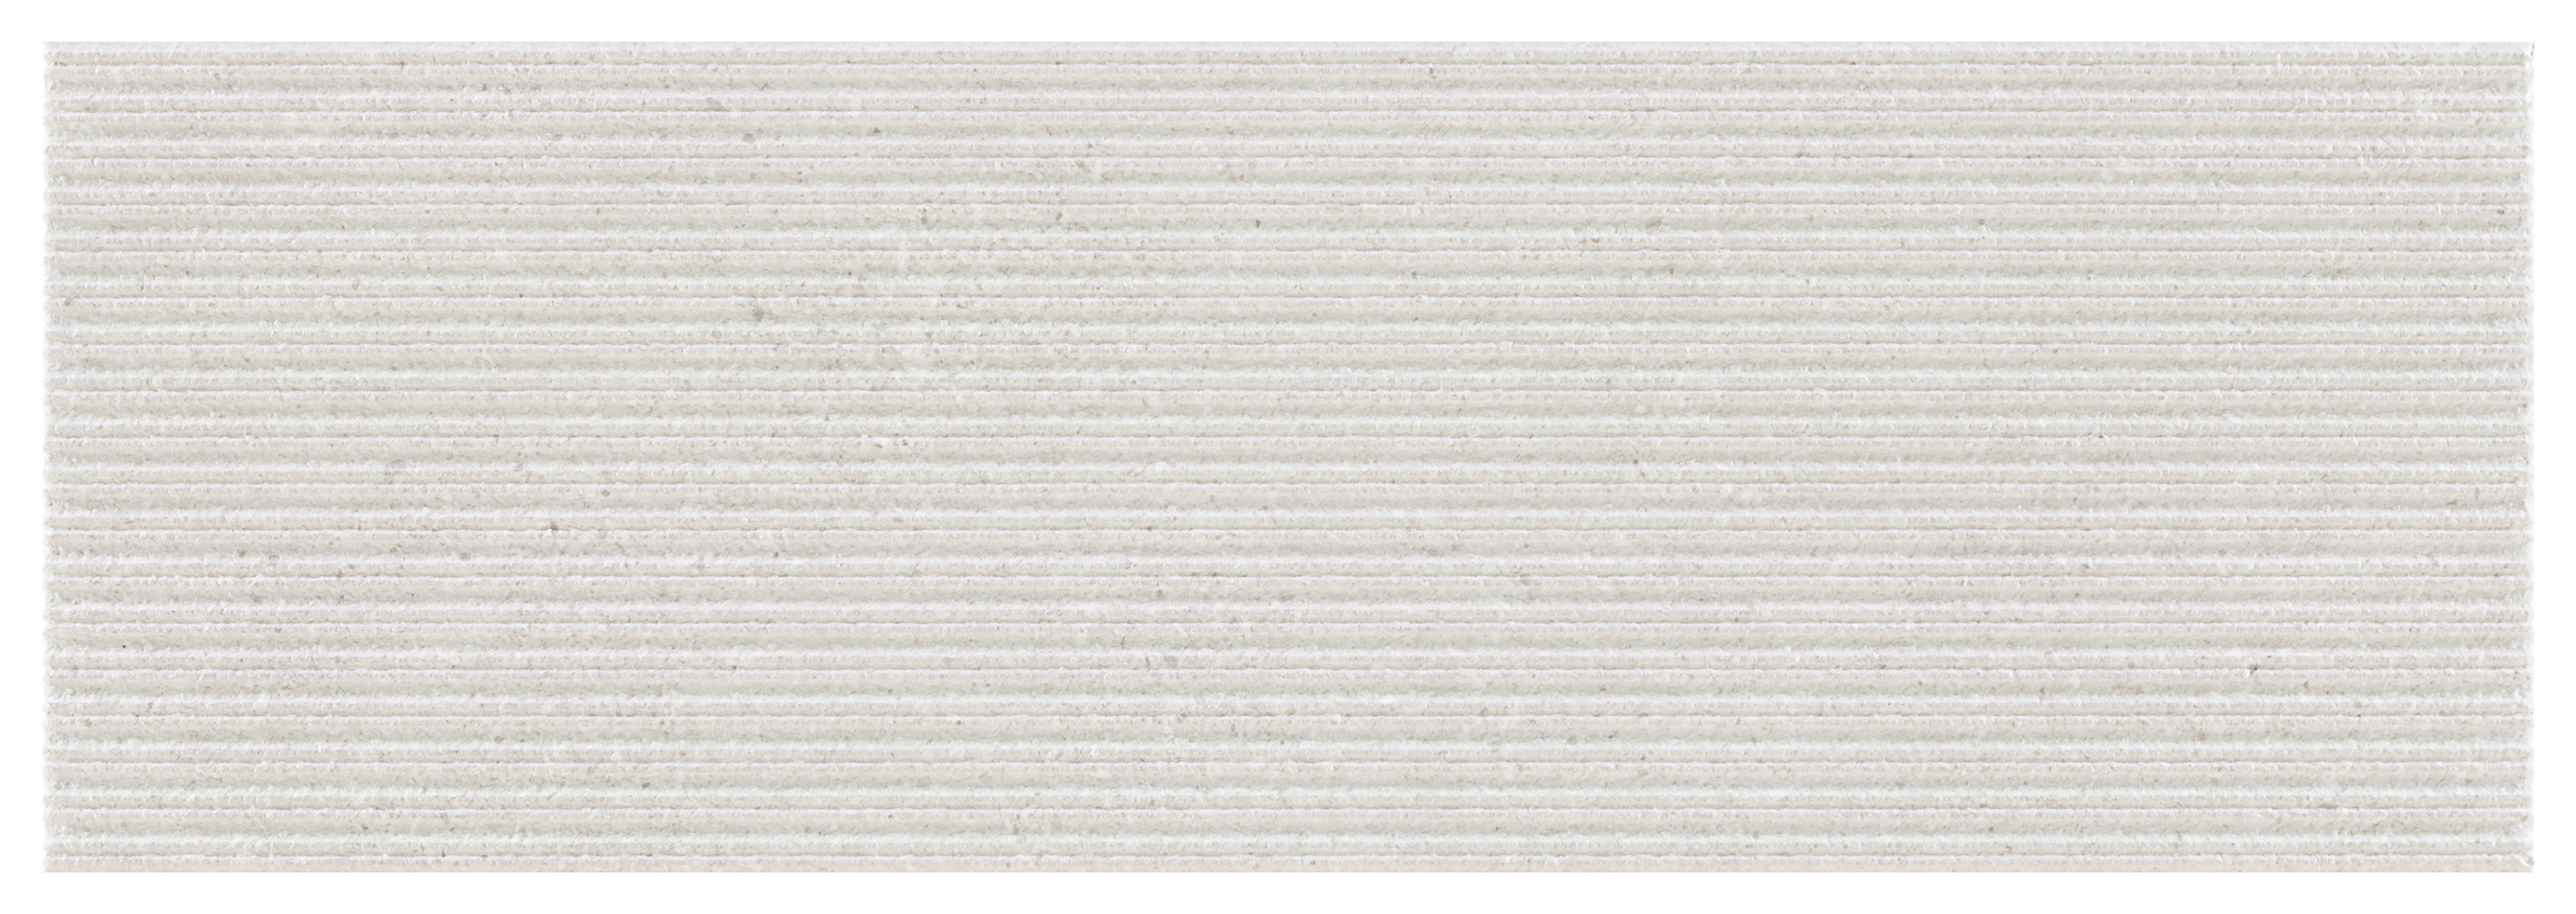 Wickes Boutique Calatrava Dcor Light Grey Matt Ceramic Wall Tile - Cut Sample